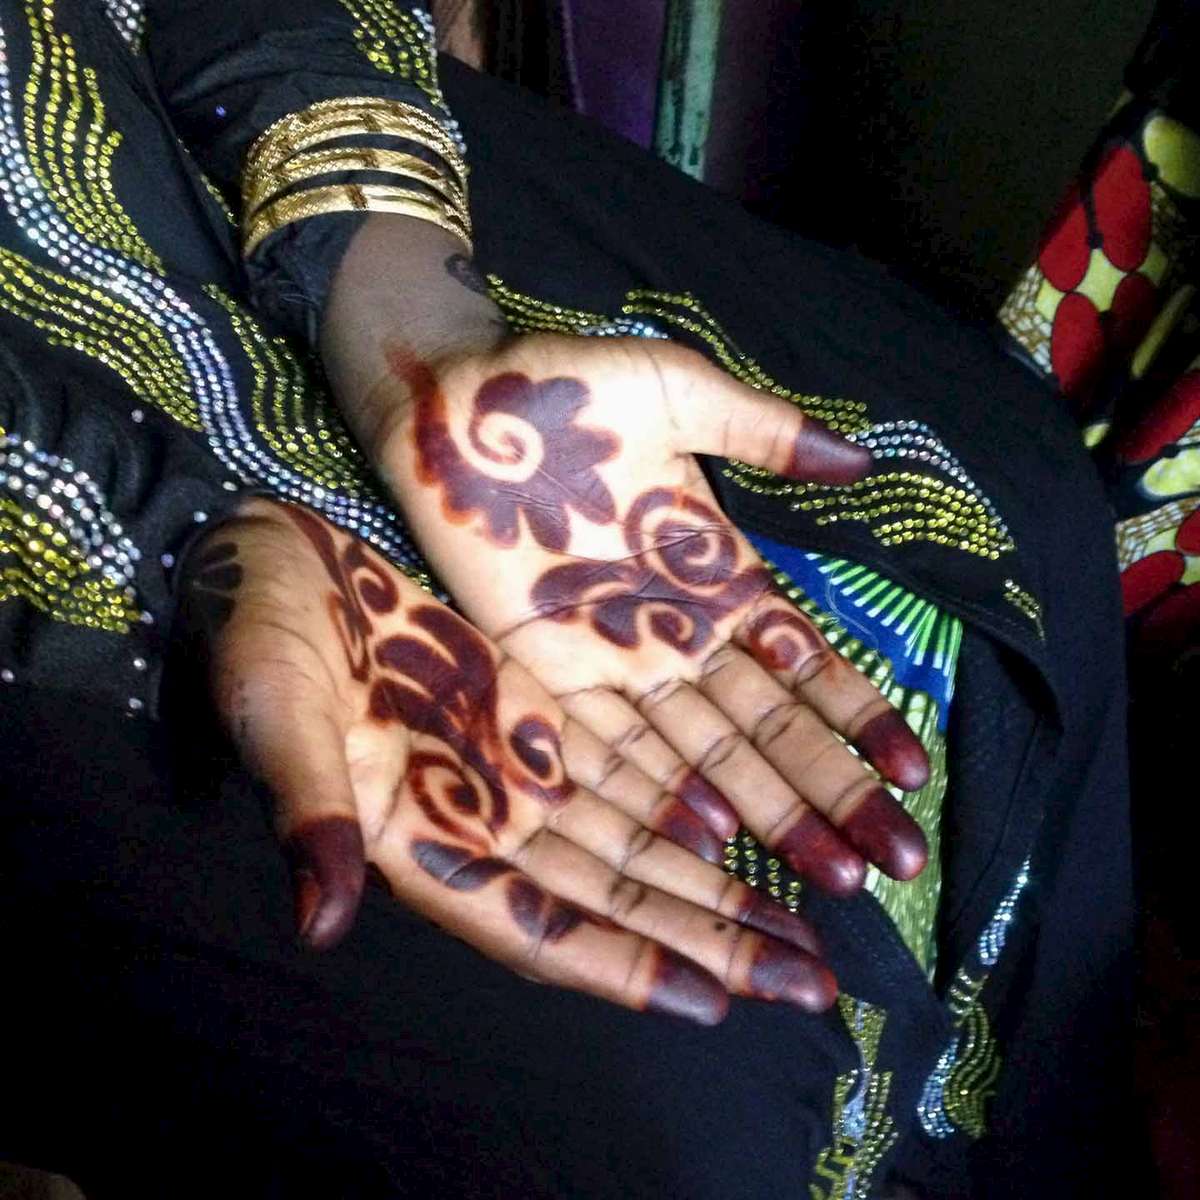 Henna\'ed hands before a wedding. Northern Nigeria. November 2014.